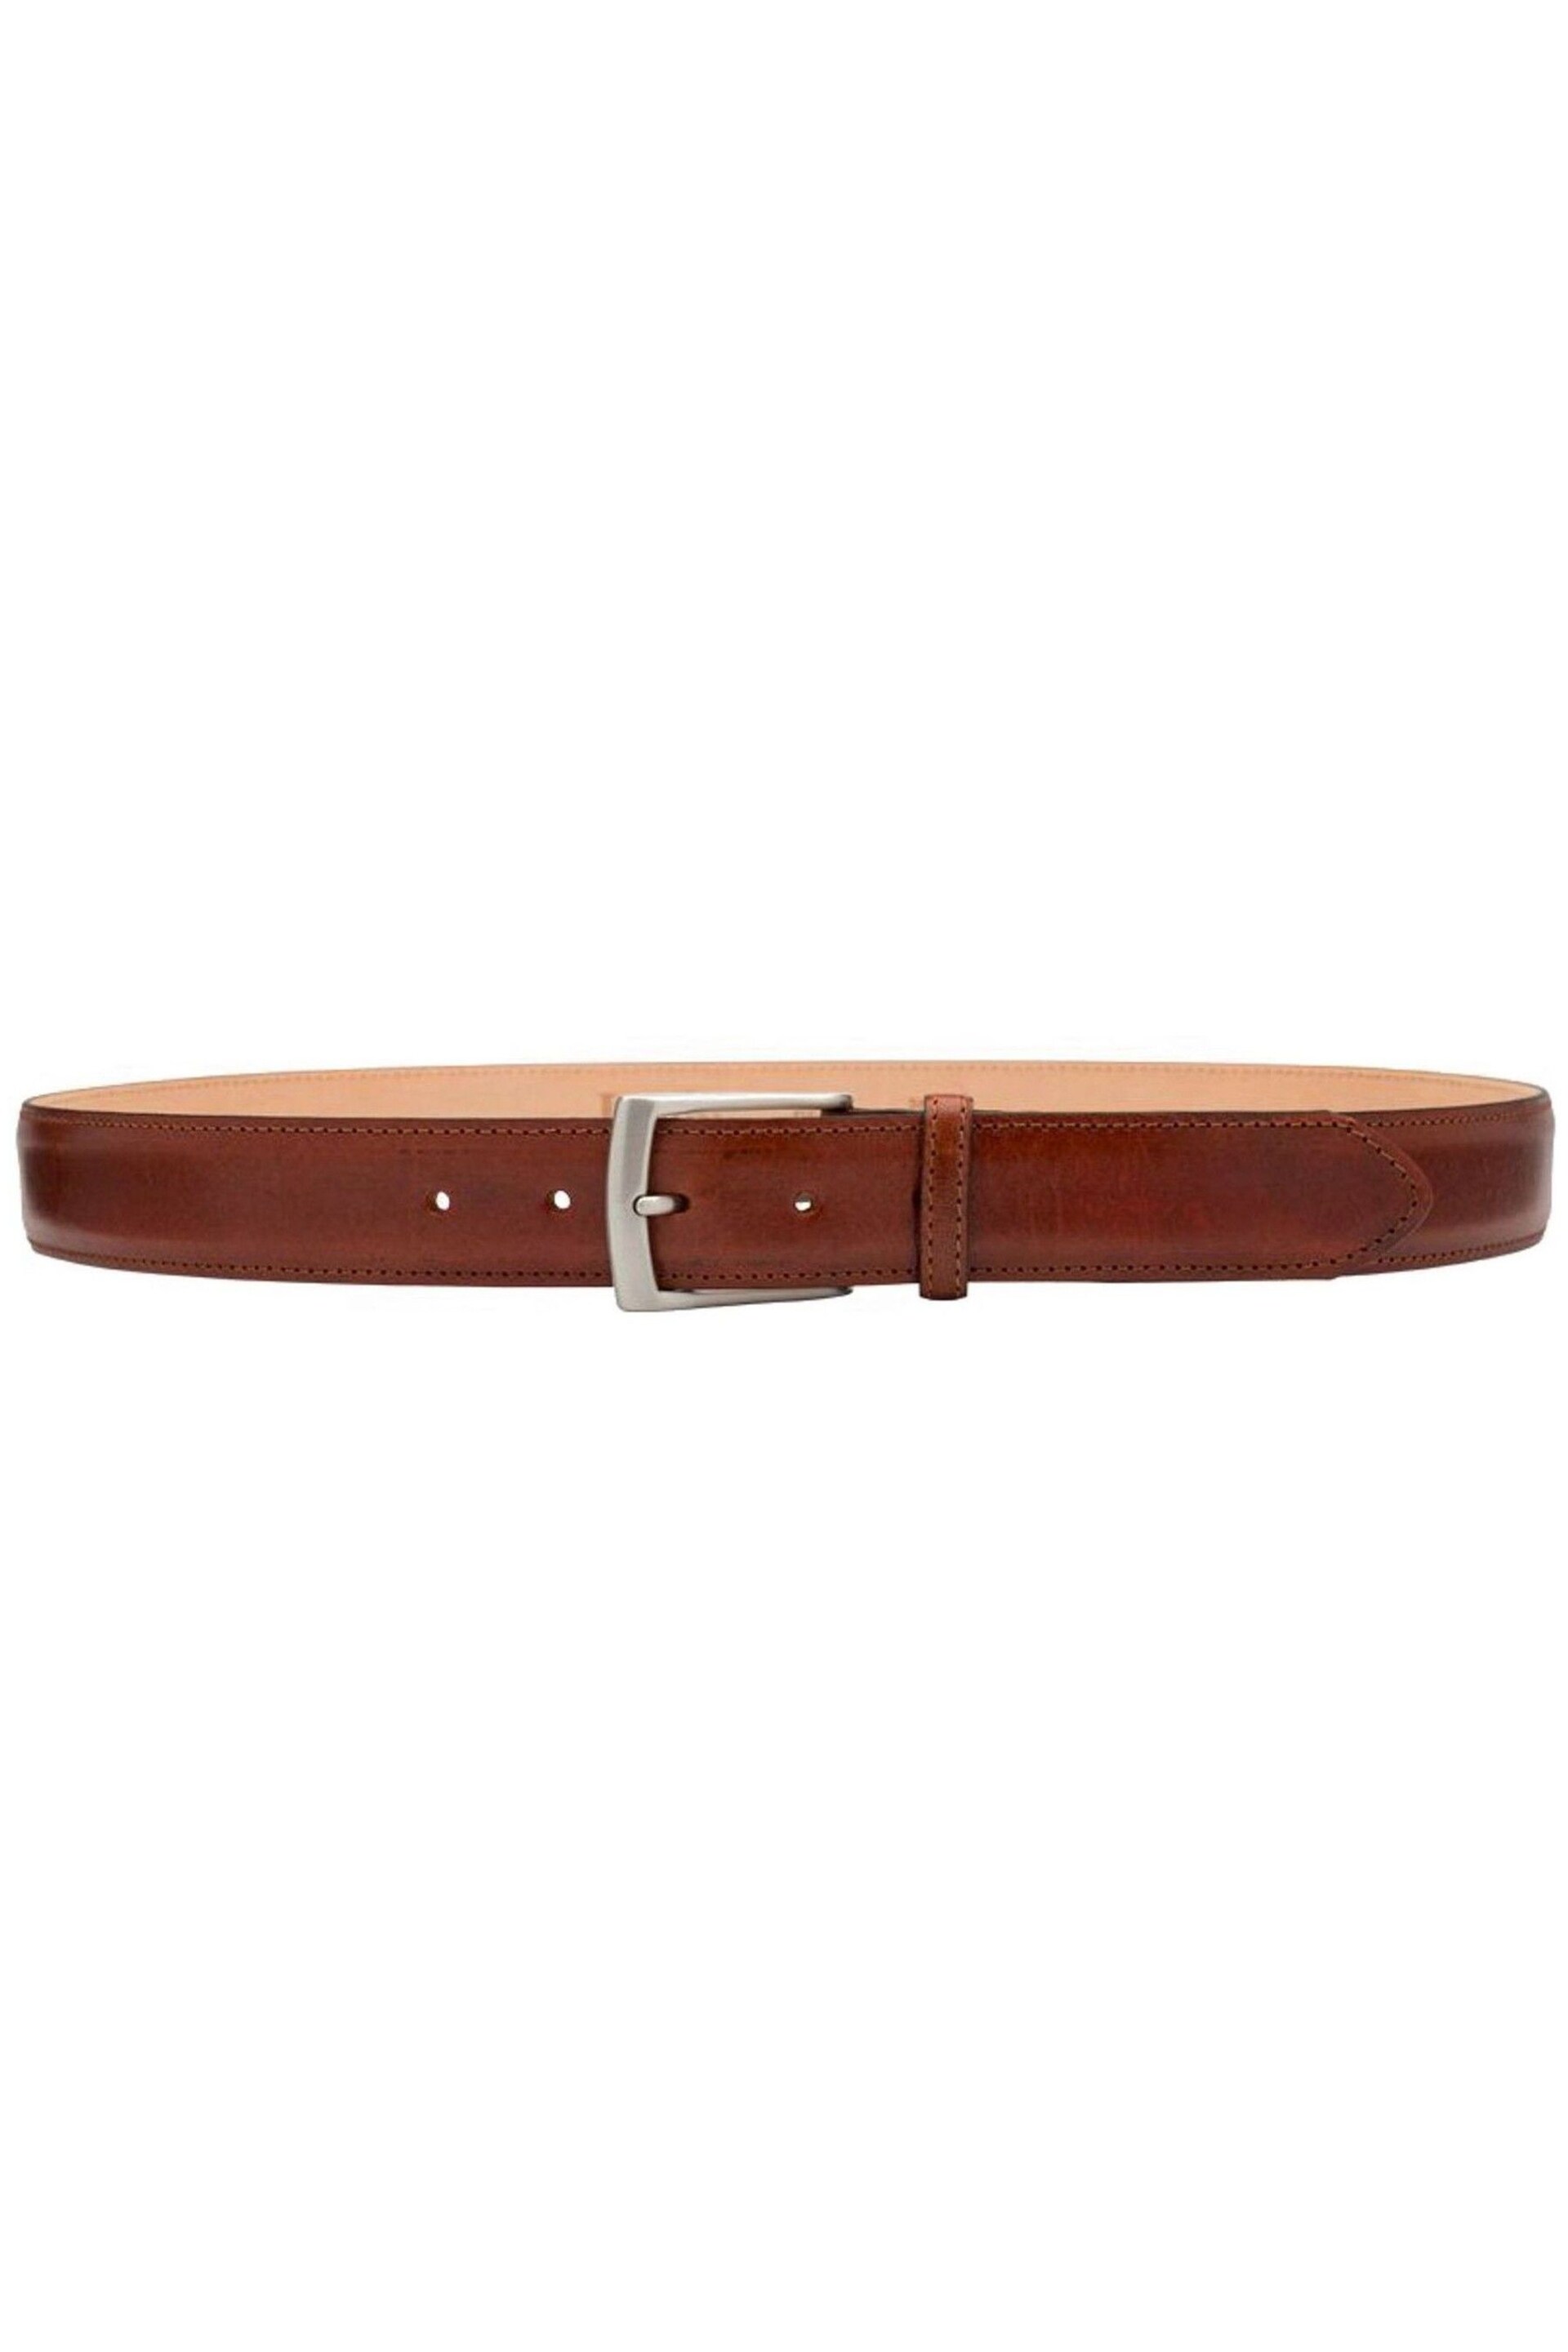 Loake Henry Leather Belt - Image 1 of 2